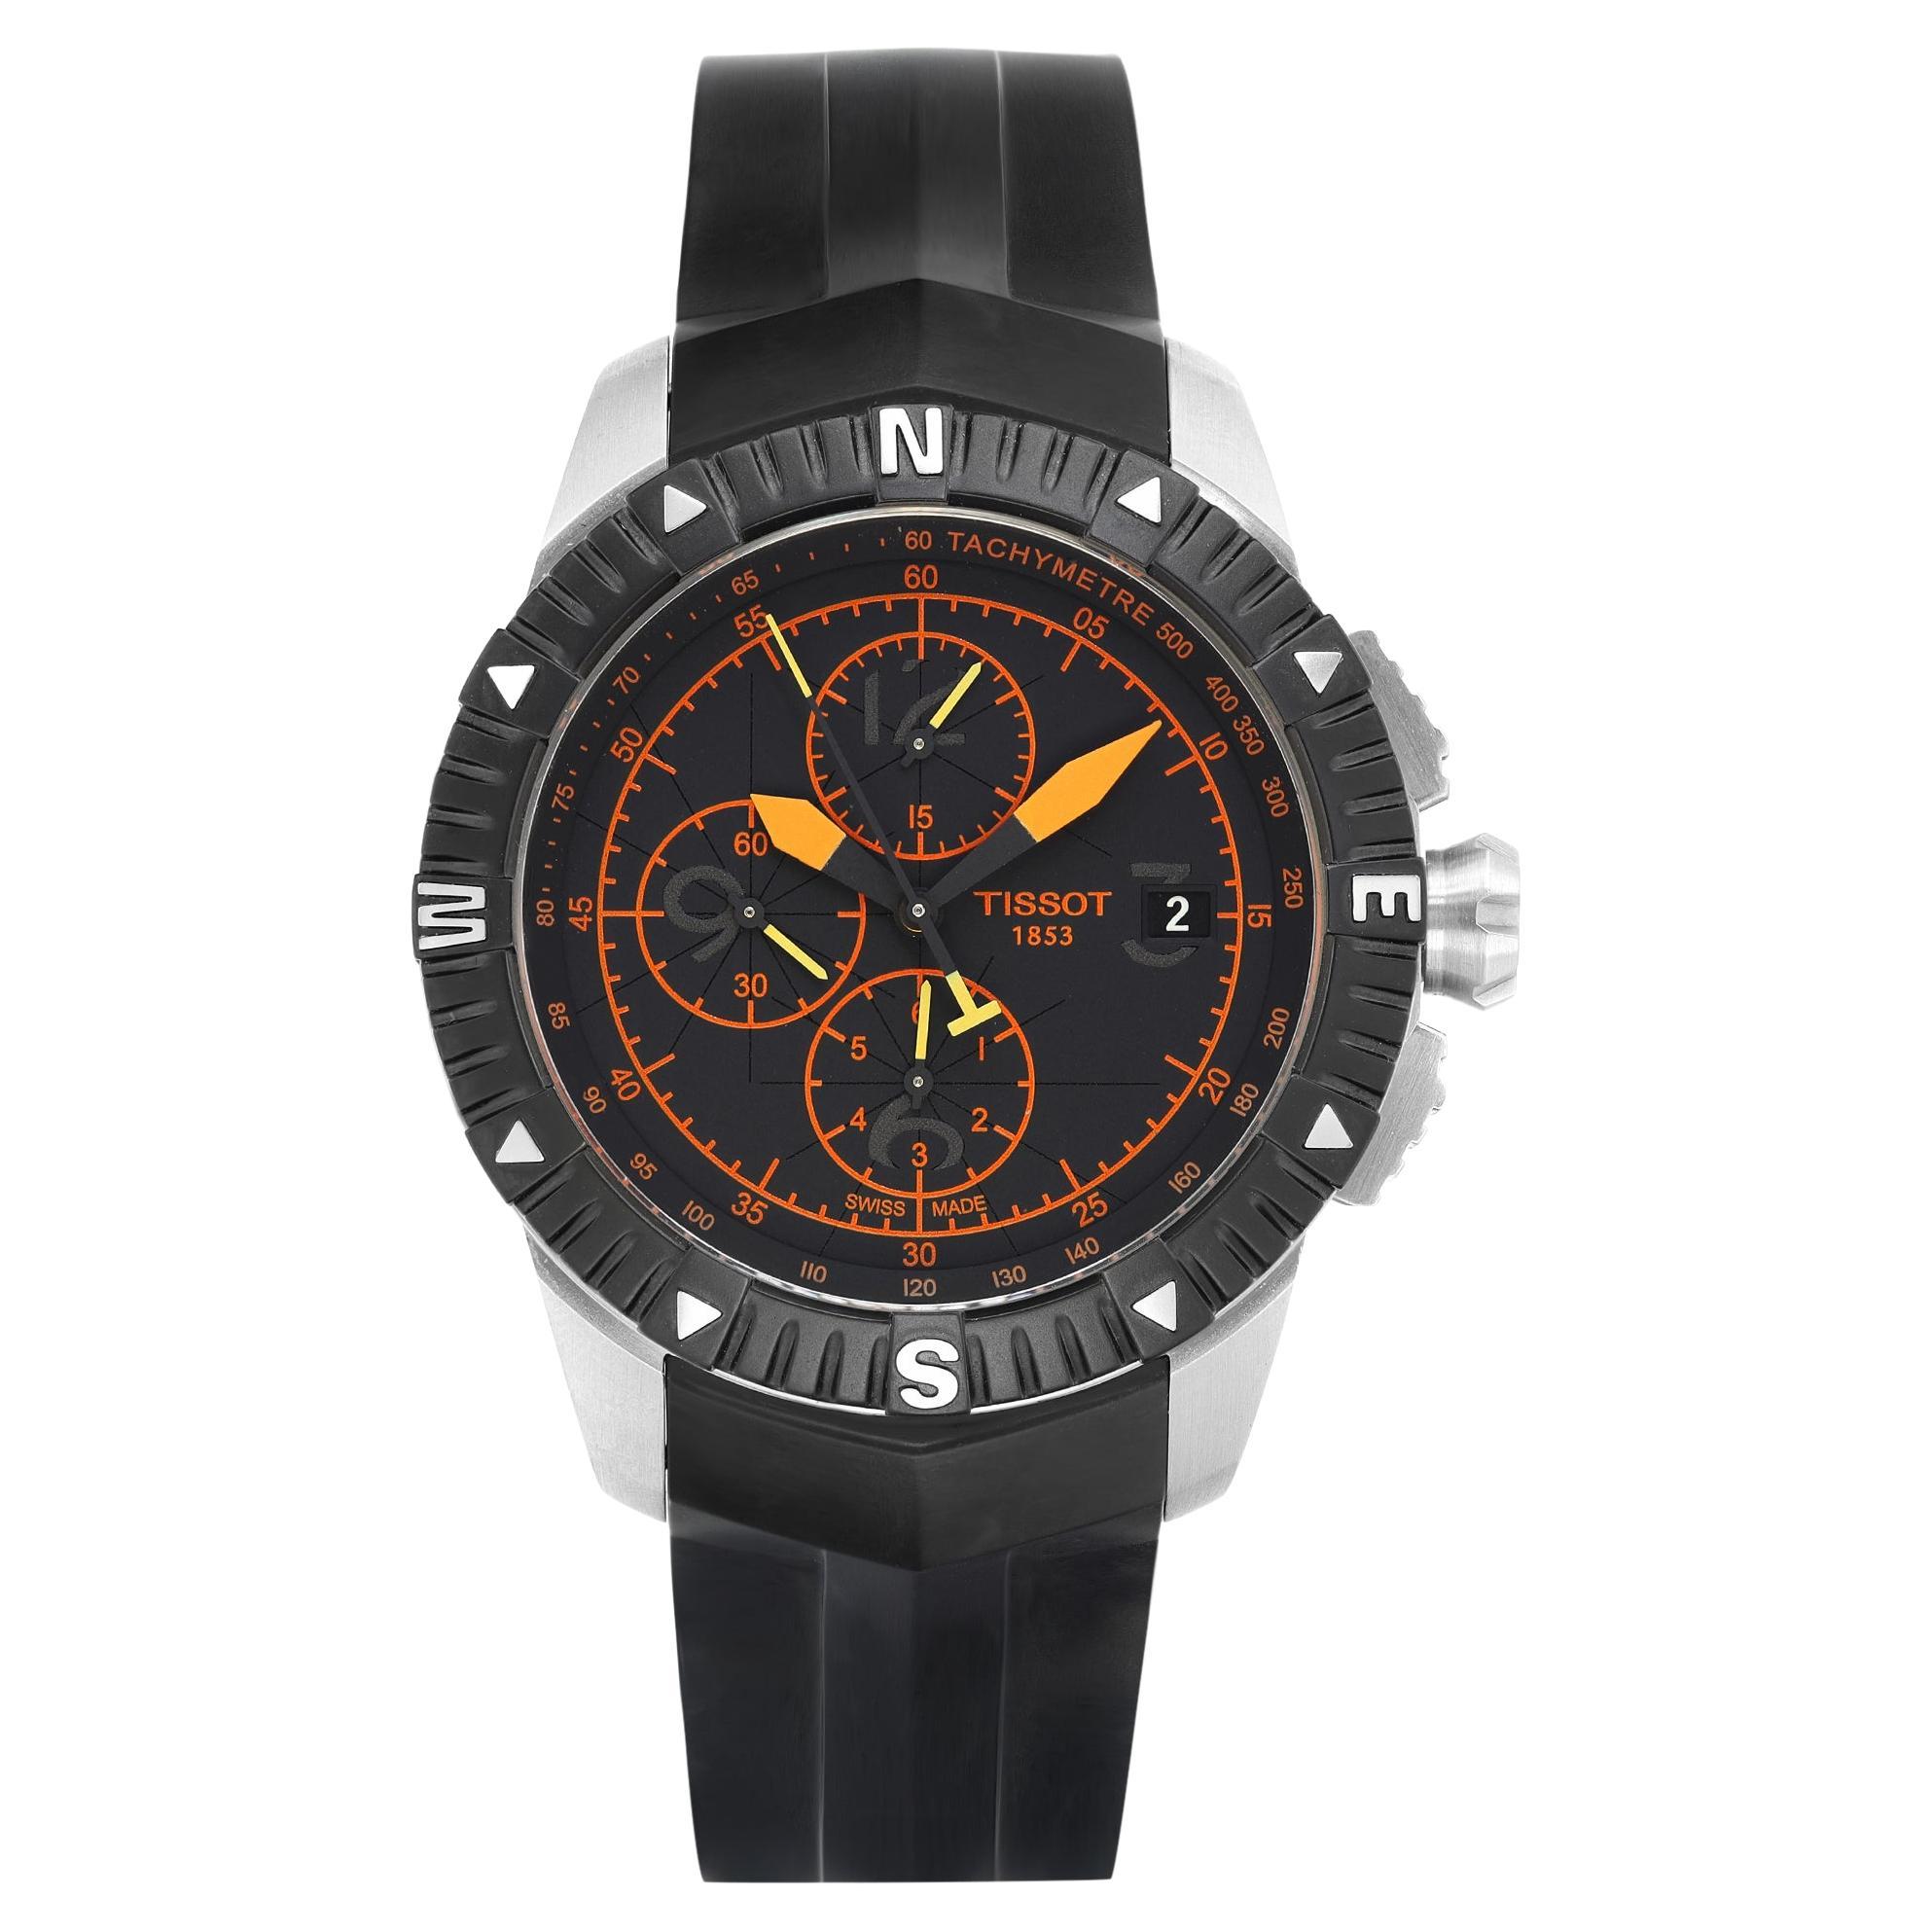 Tissot T-Navigator Steel Black Dial Automatic Mens Watch T062.427.17.057.01